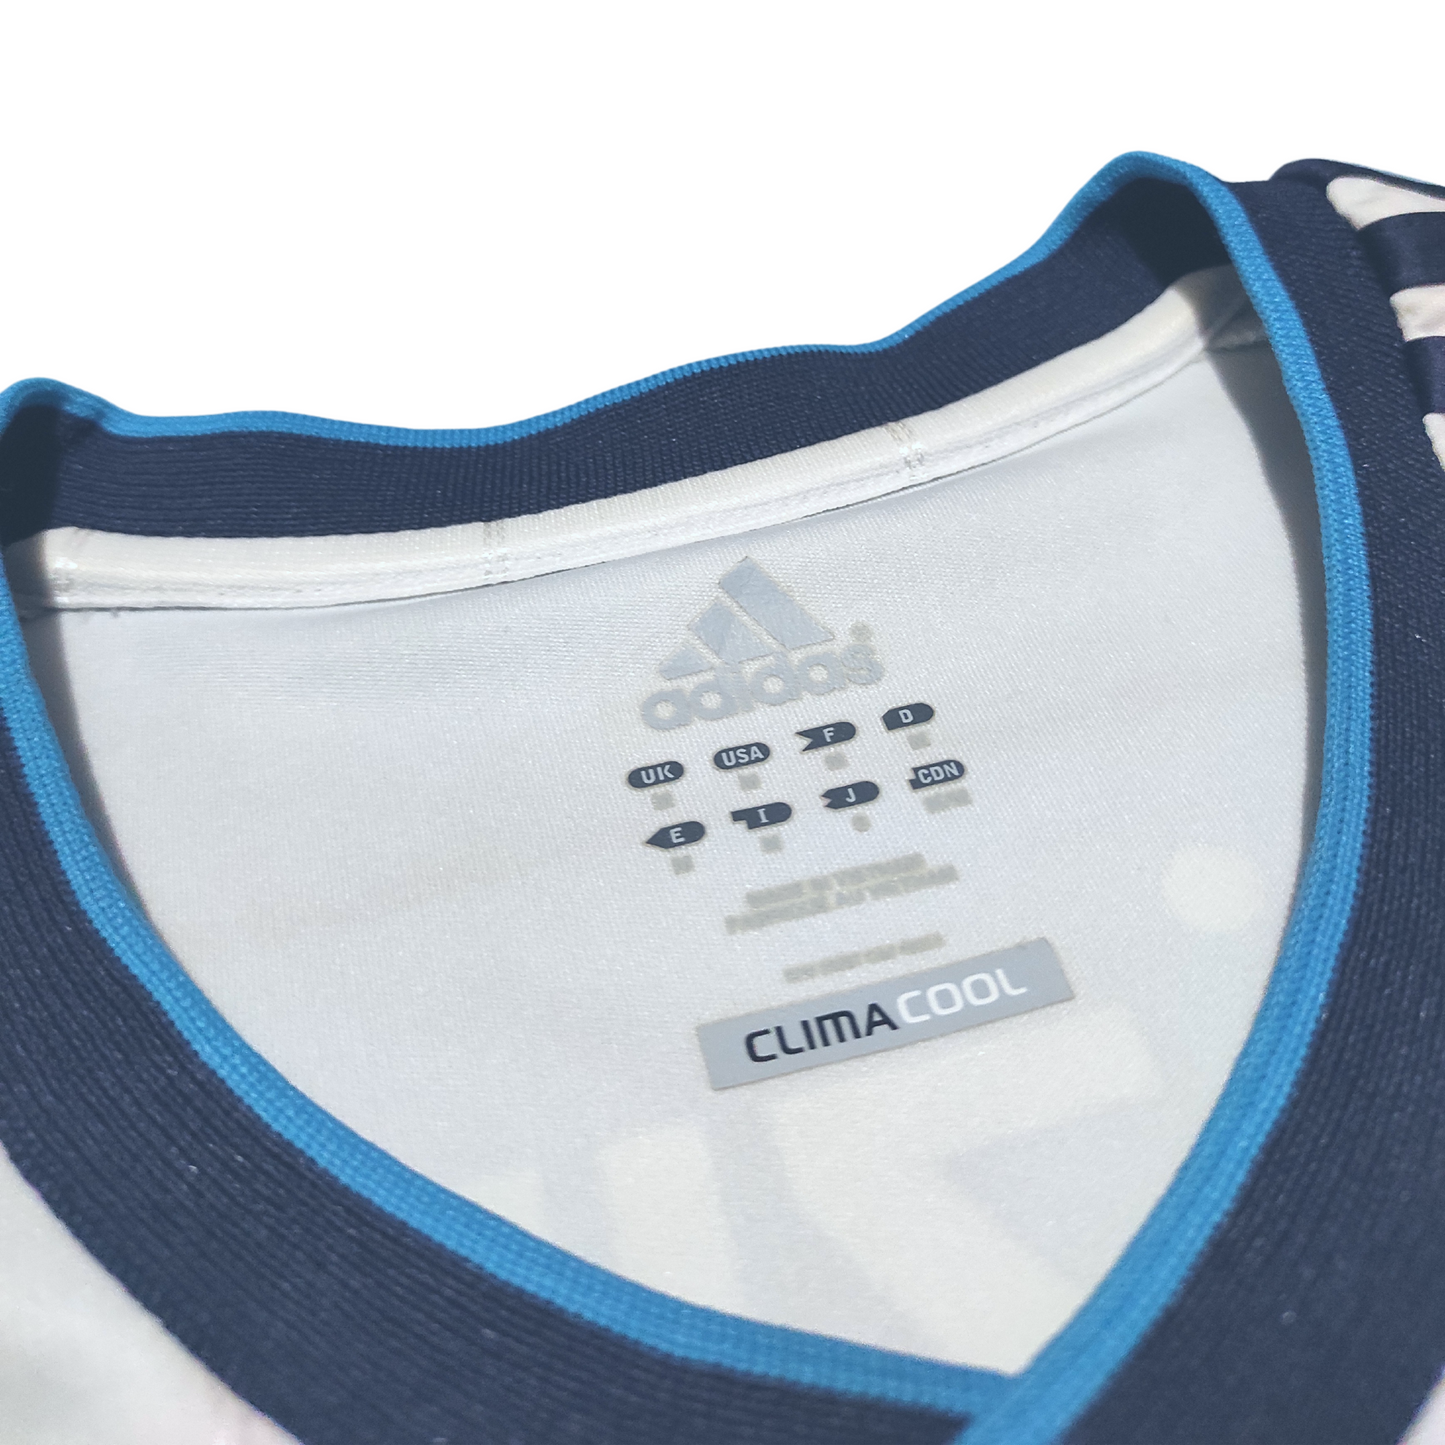 Real Madrid Home L/S Shirt 2012-2013 Ozil (M)